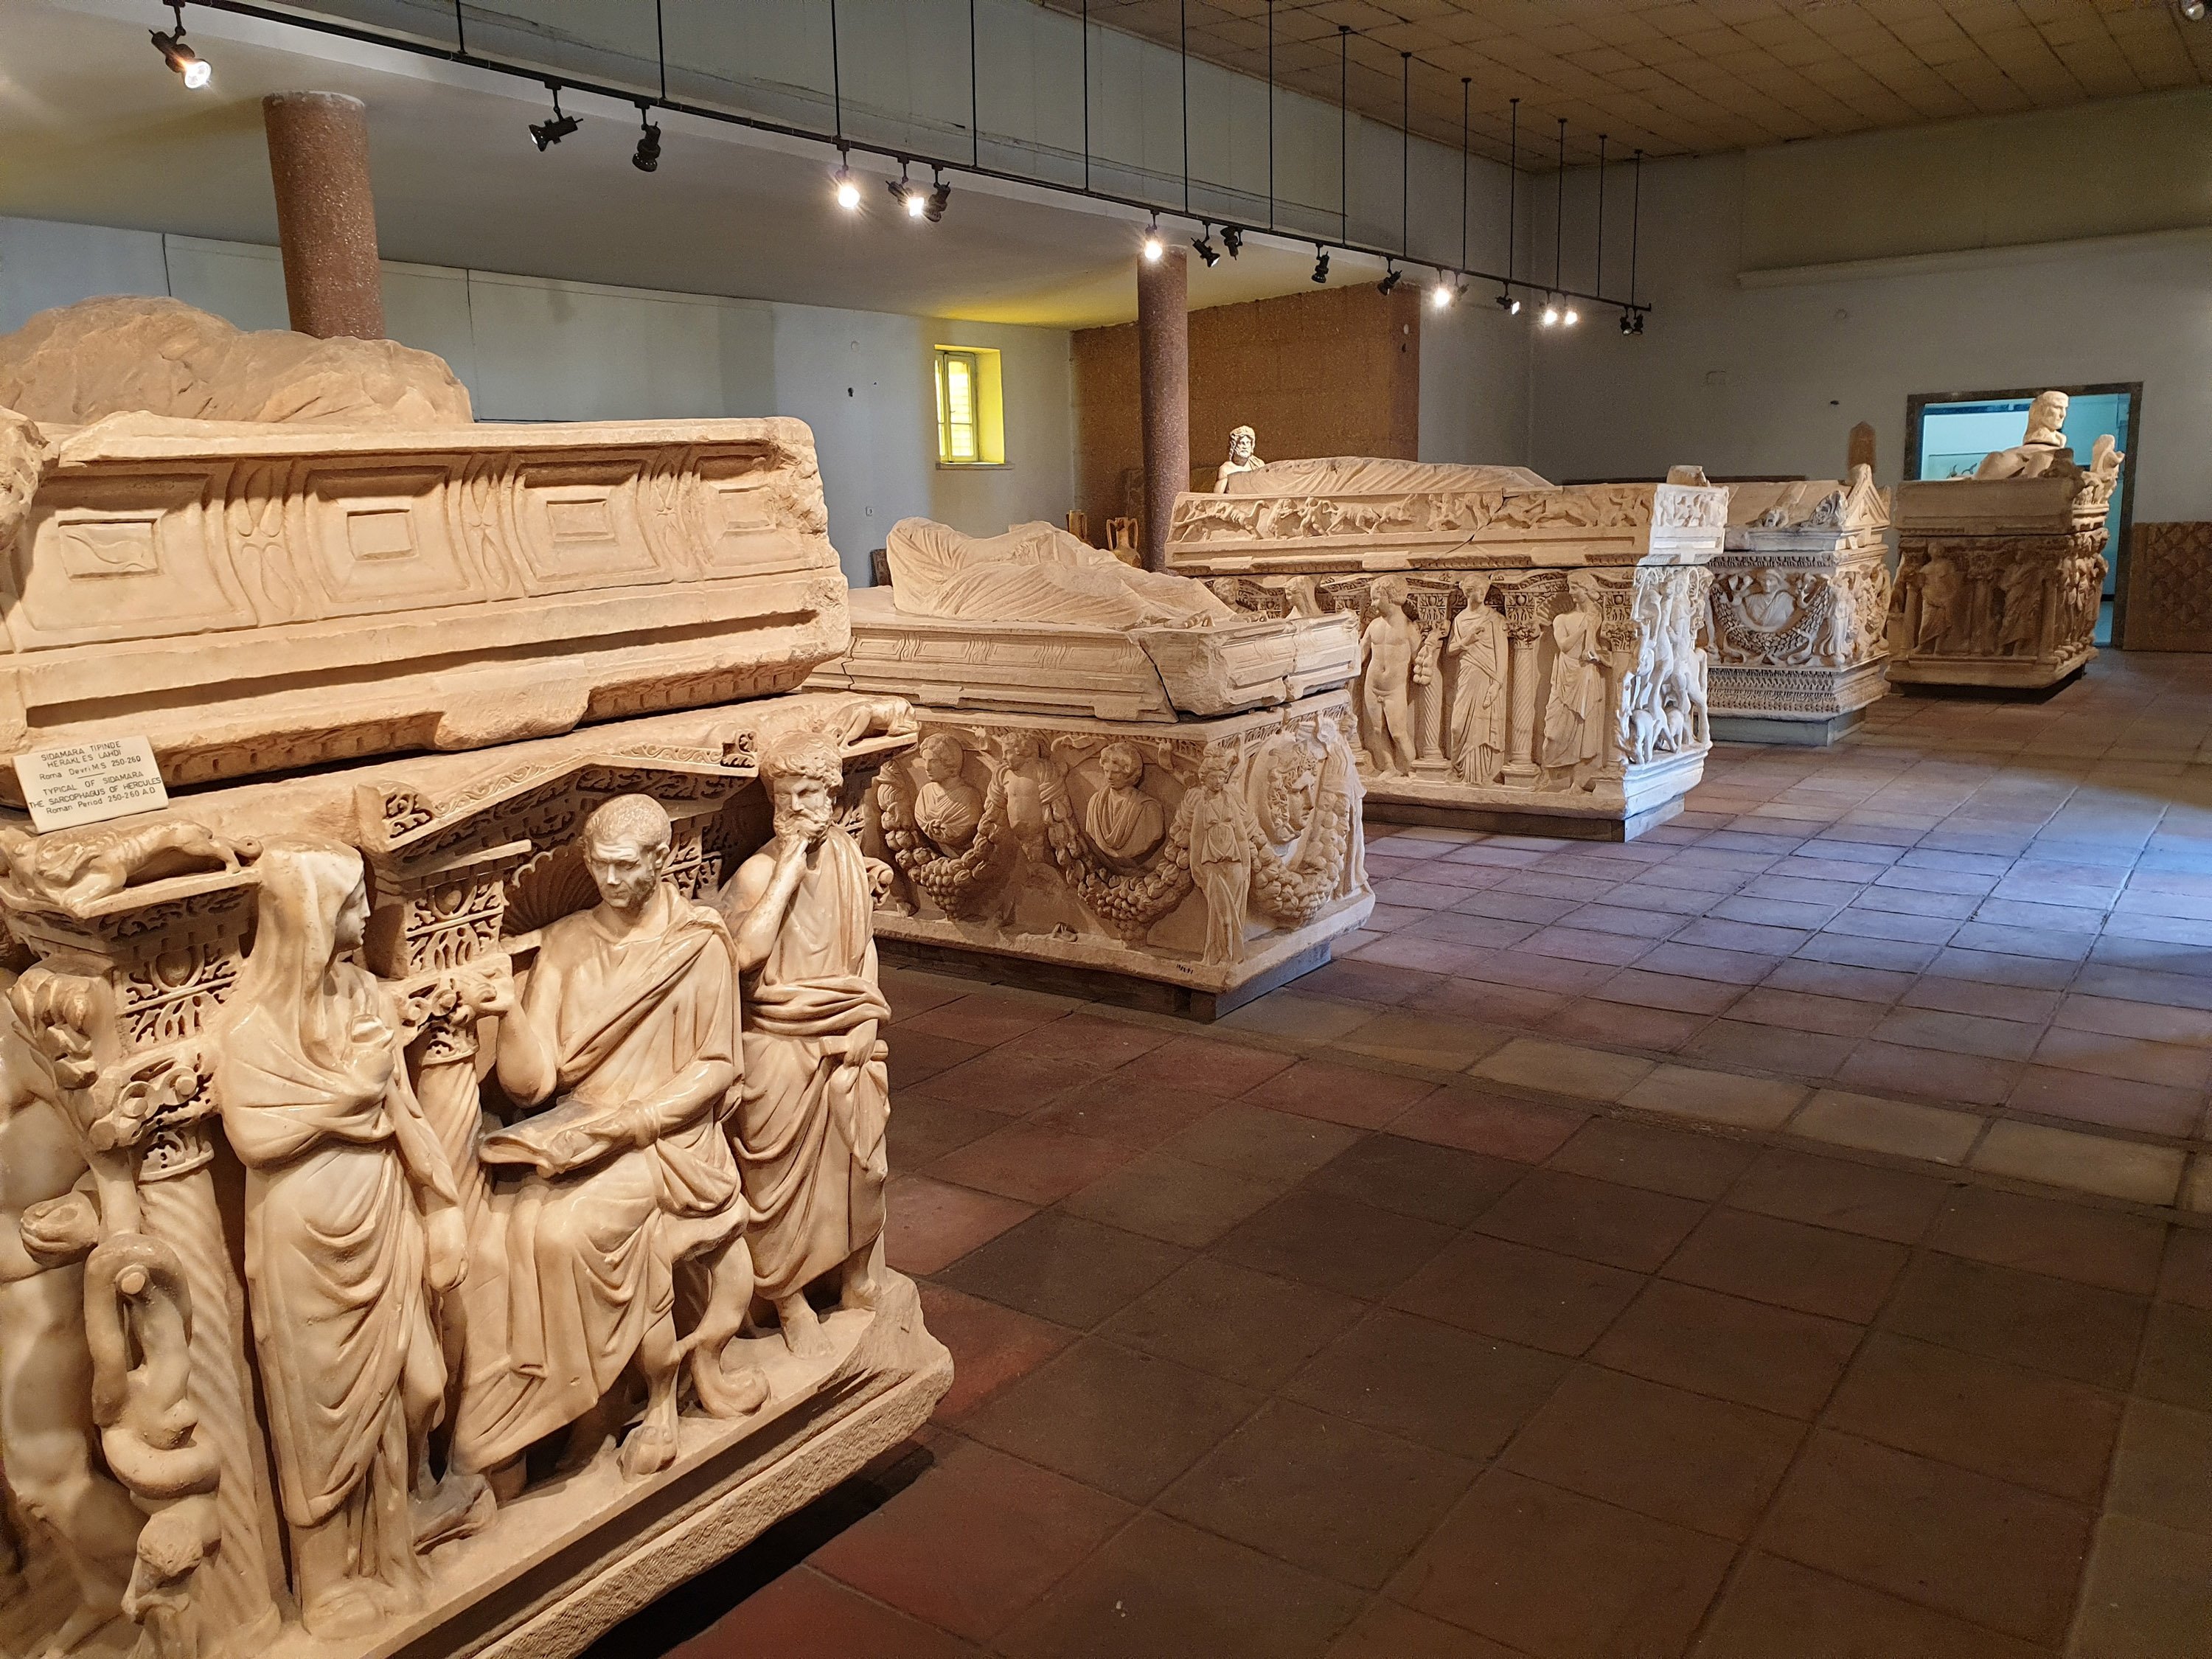 Sarcophagi at Konya Archeology Museum. (Photo by Argun Konuk)